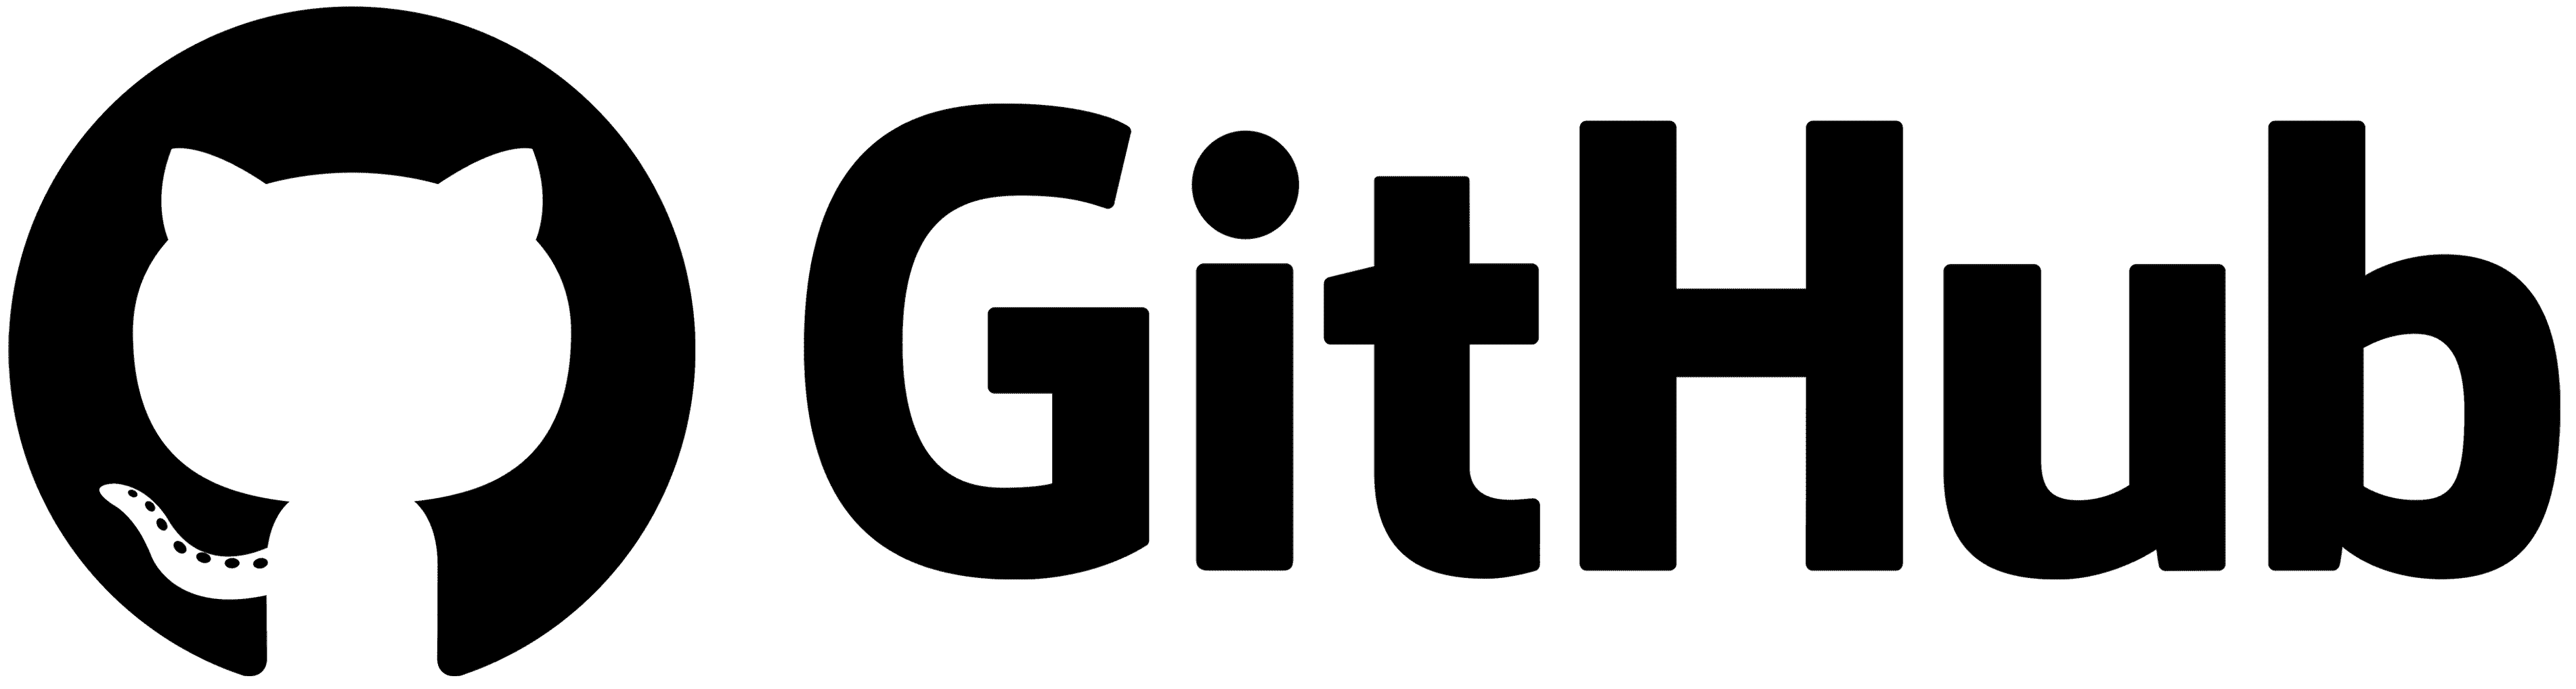 GitHub vendor logo